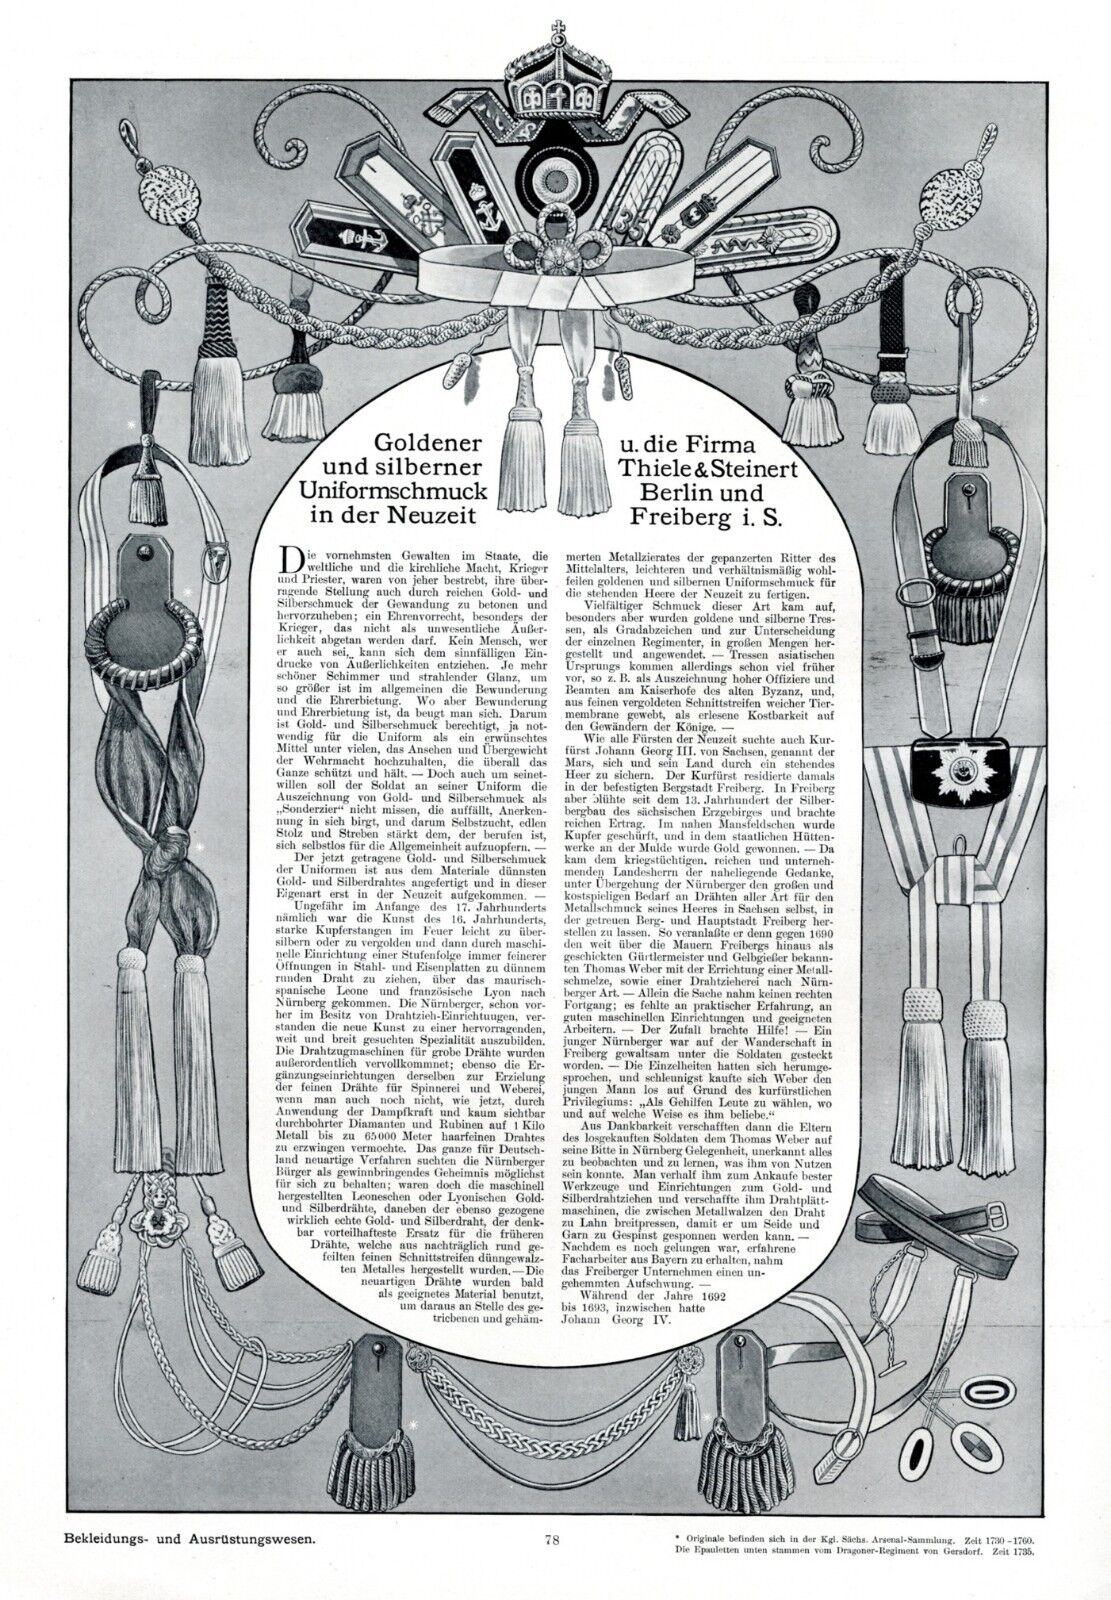 Uniform jewelery Thiele & Steinert XL 1913 ad German advertising medal WW 1